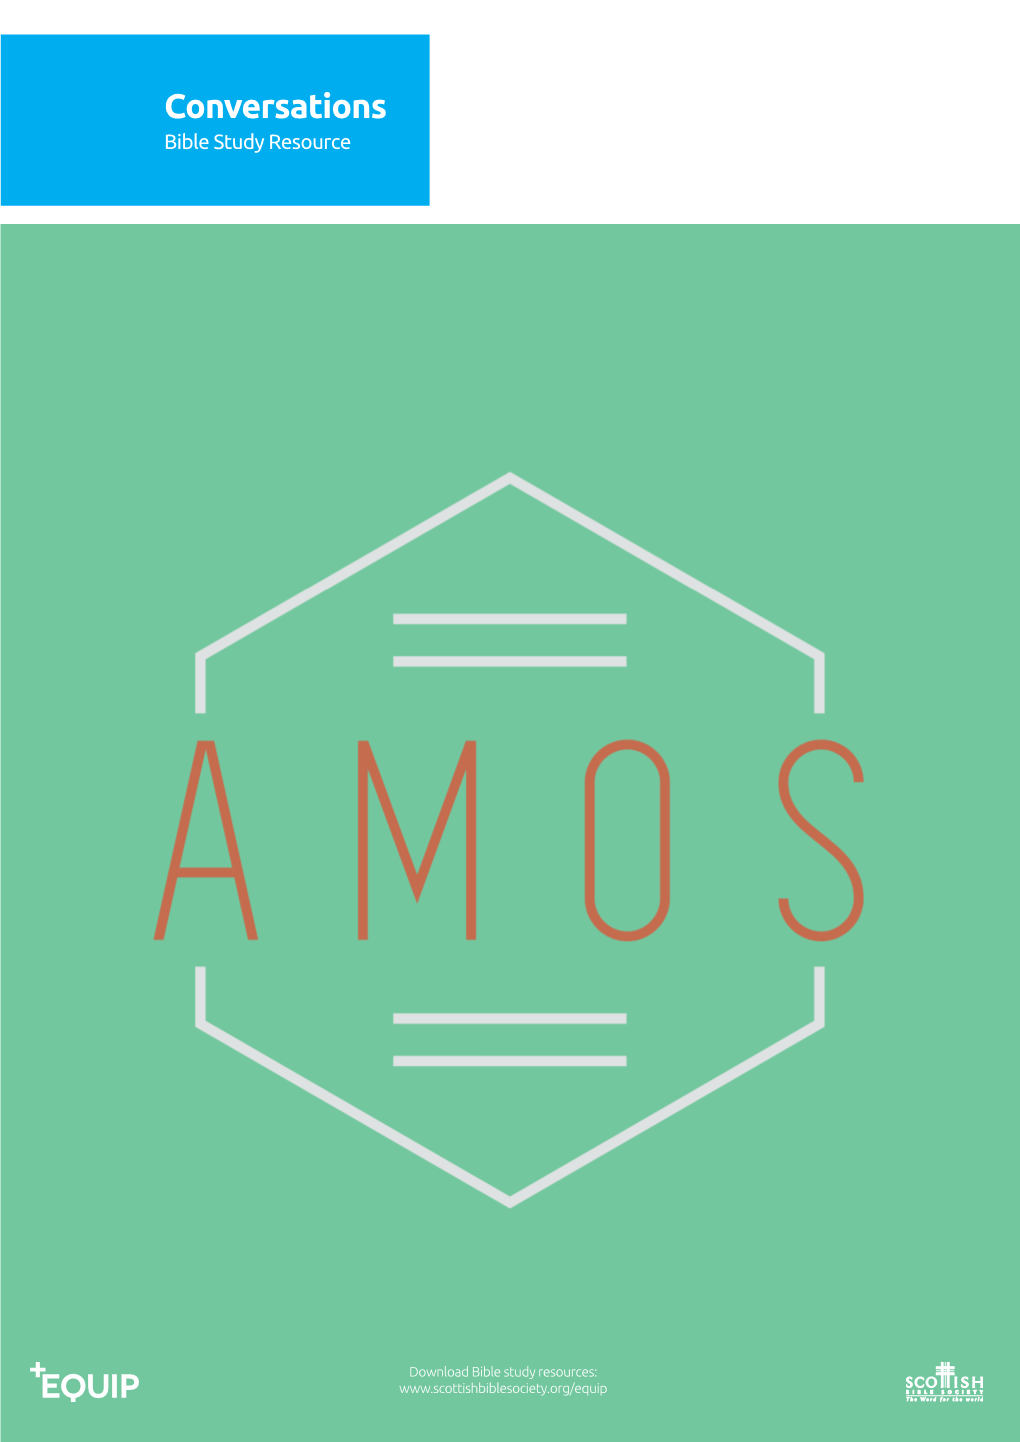 Amos Small Group Bible Study (Conversations)